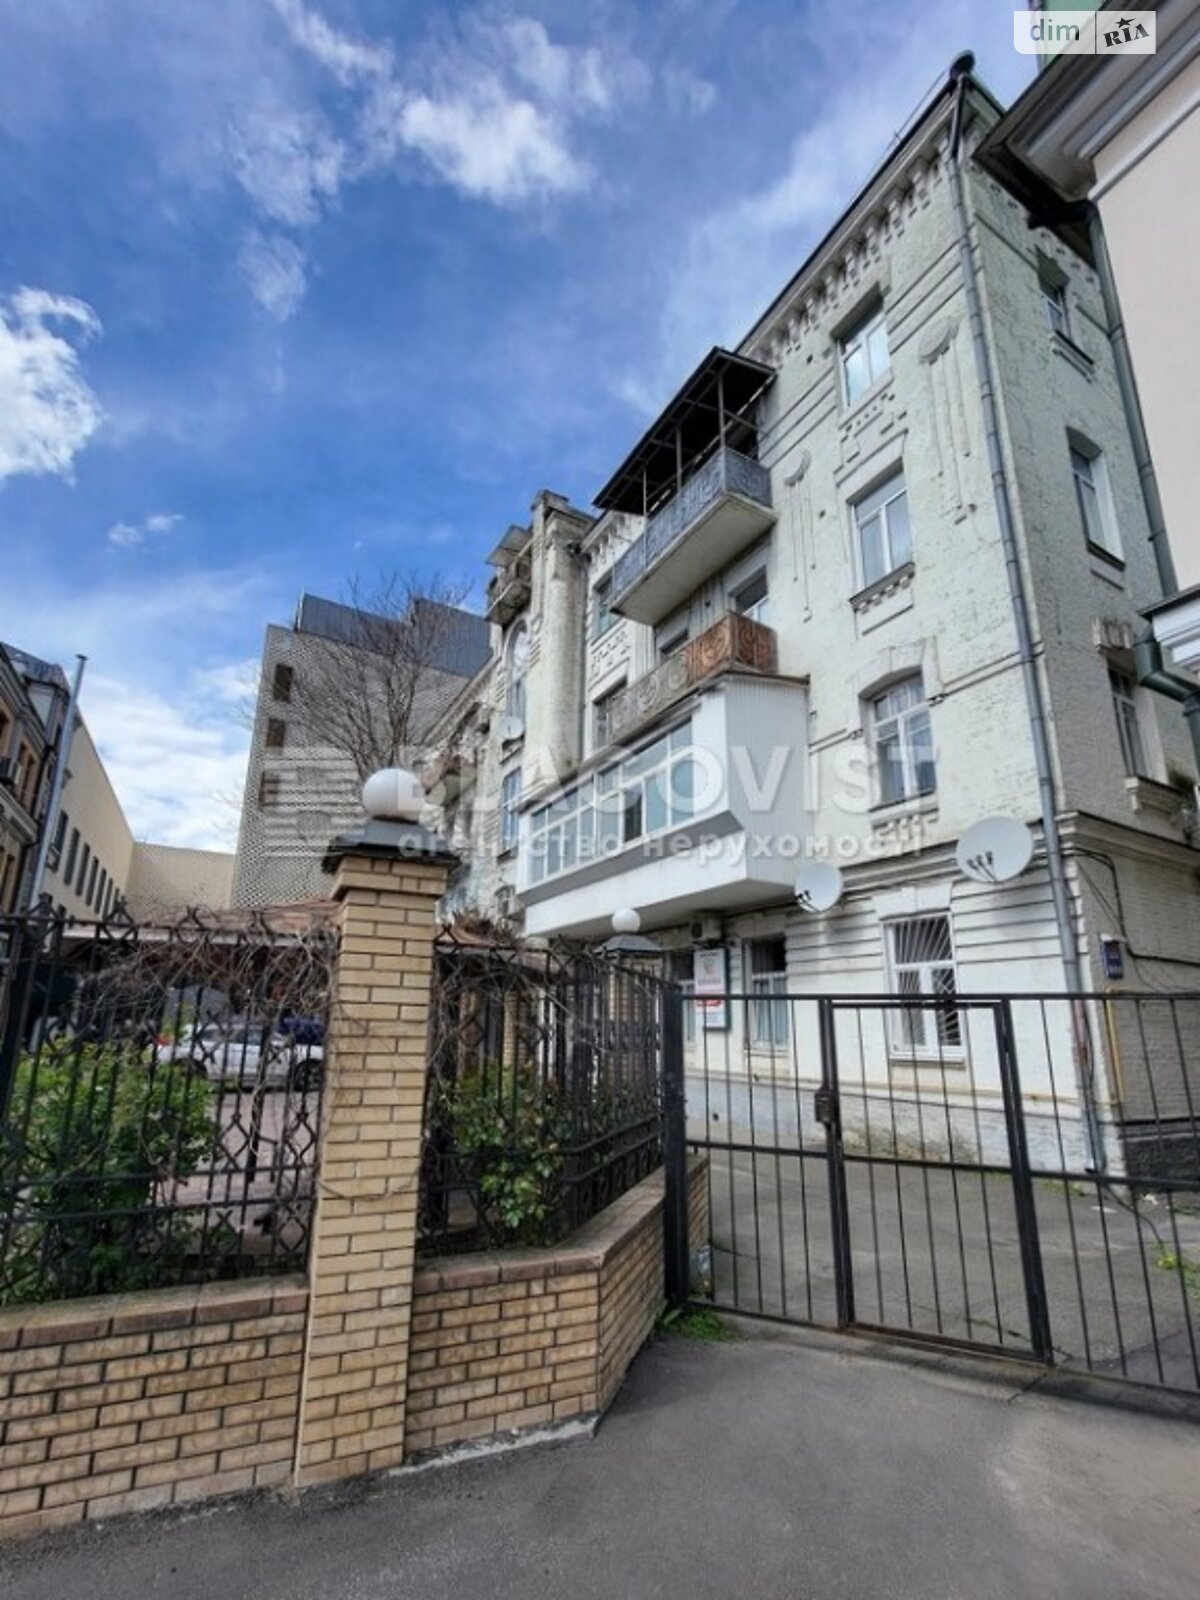 Продажа двухкомнатной квартиры в Киеве, на ул. Степана Сагайдака 16Б, район Подол фото 1